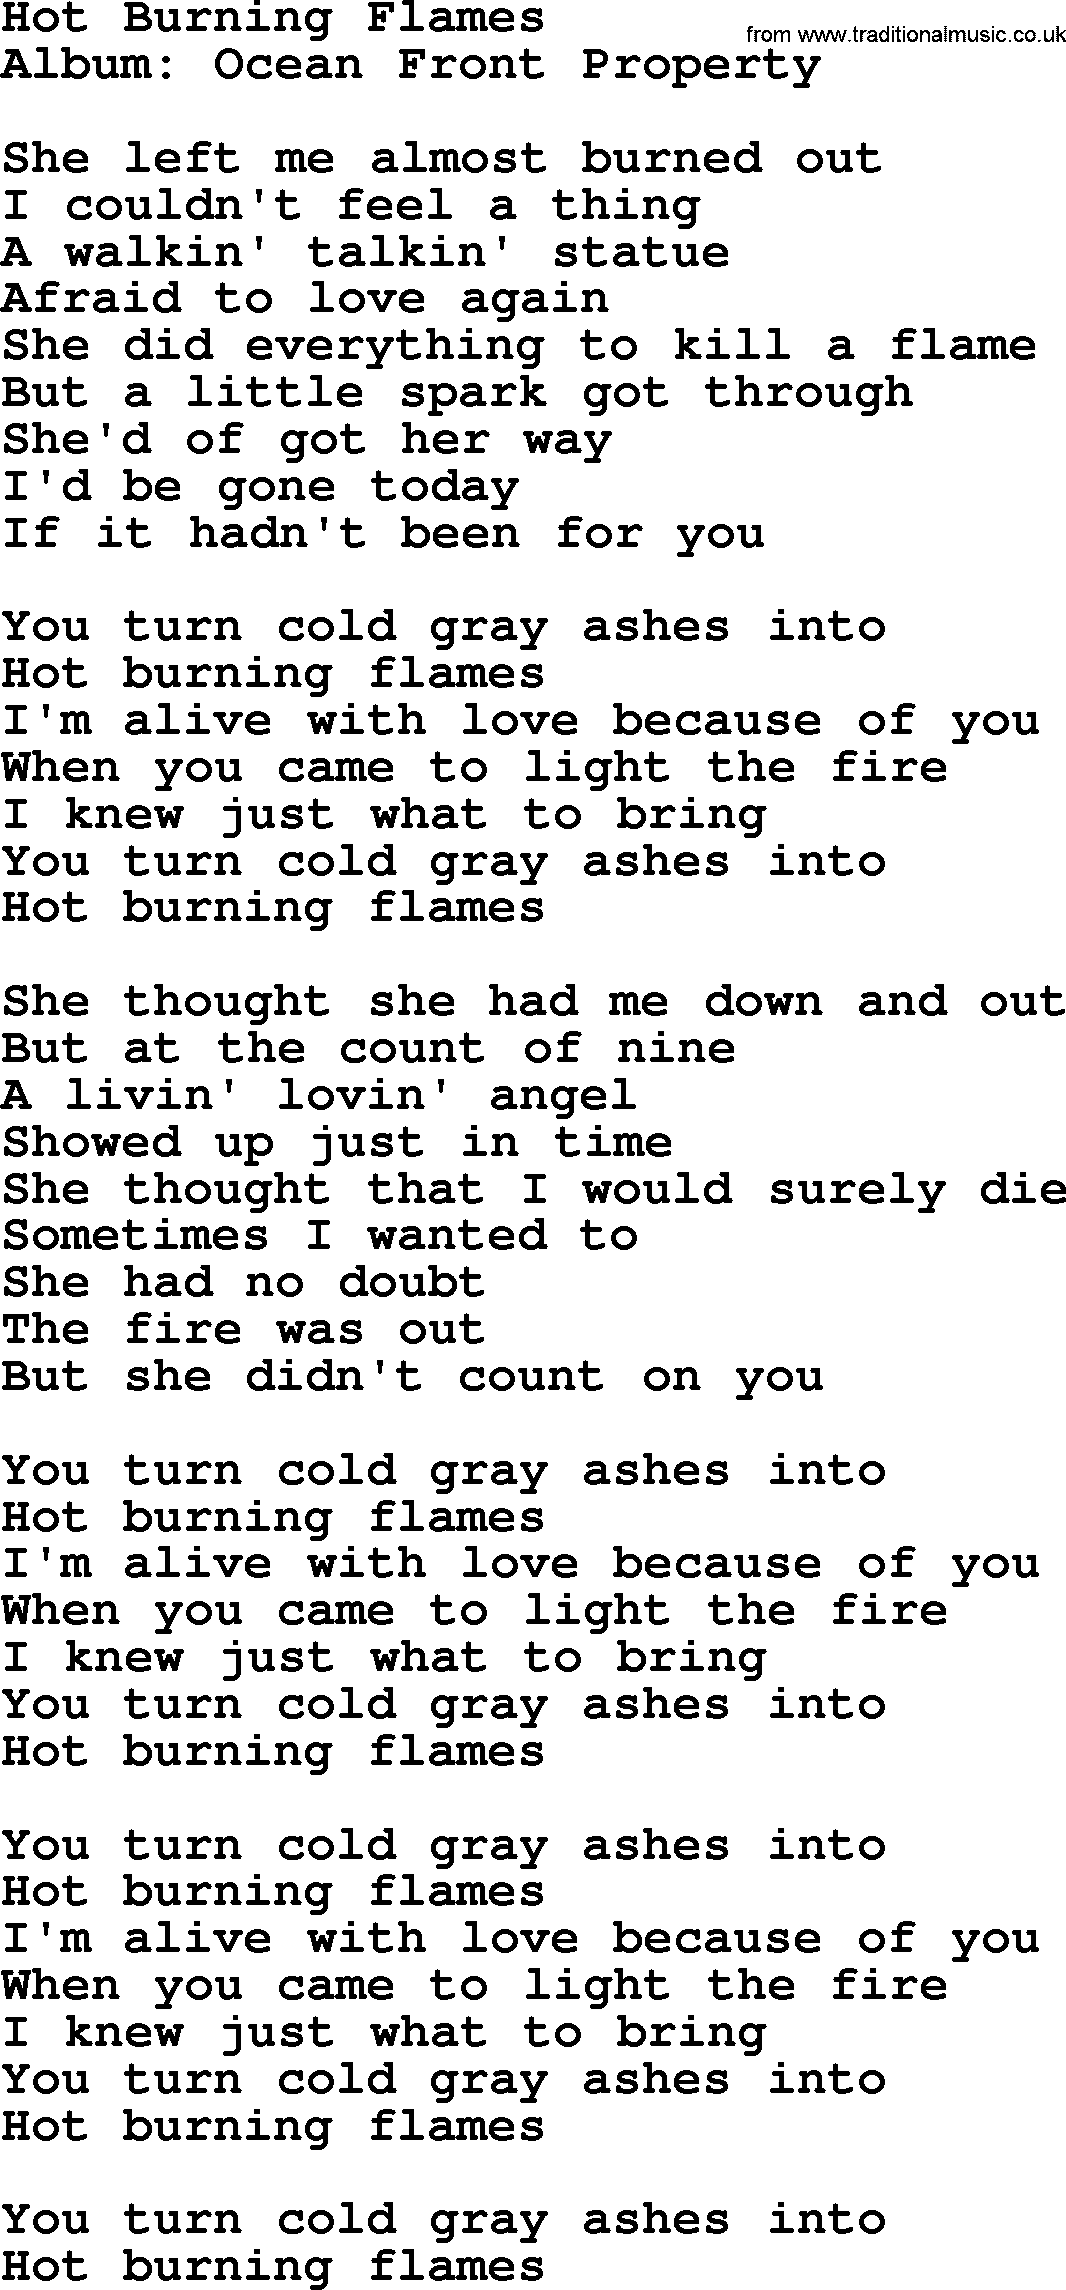 George Strait song: Hot Burning Flames, lyrics